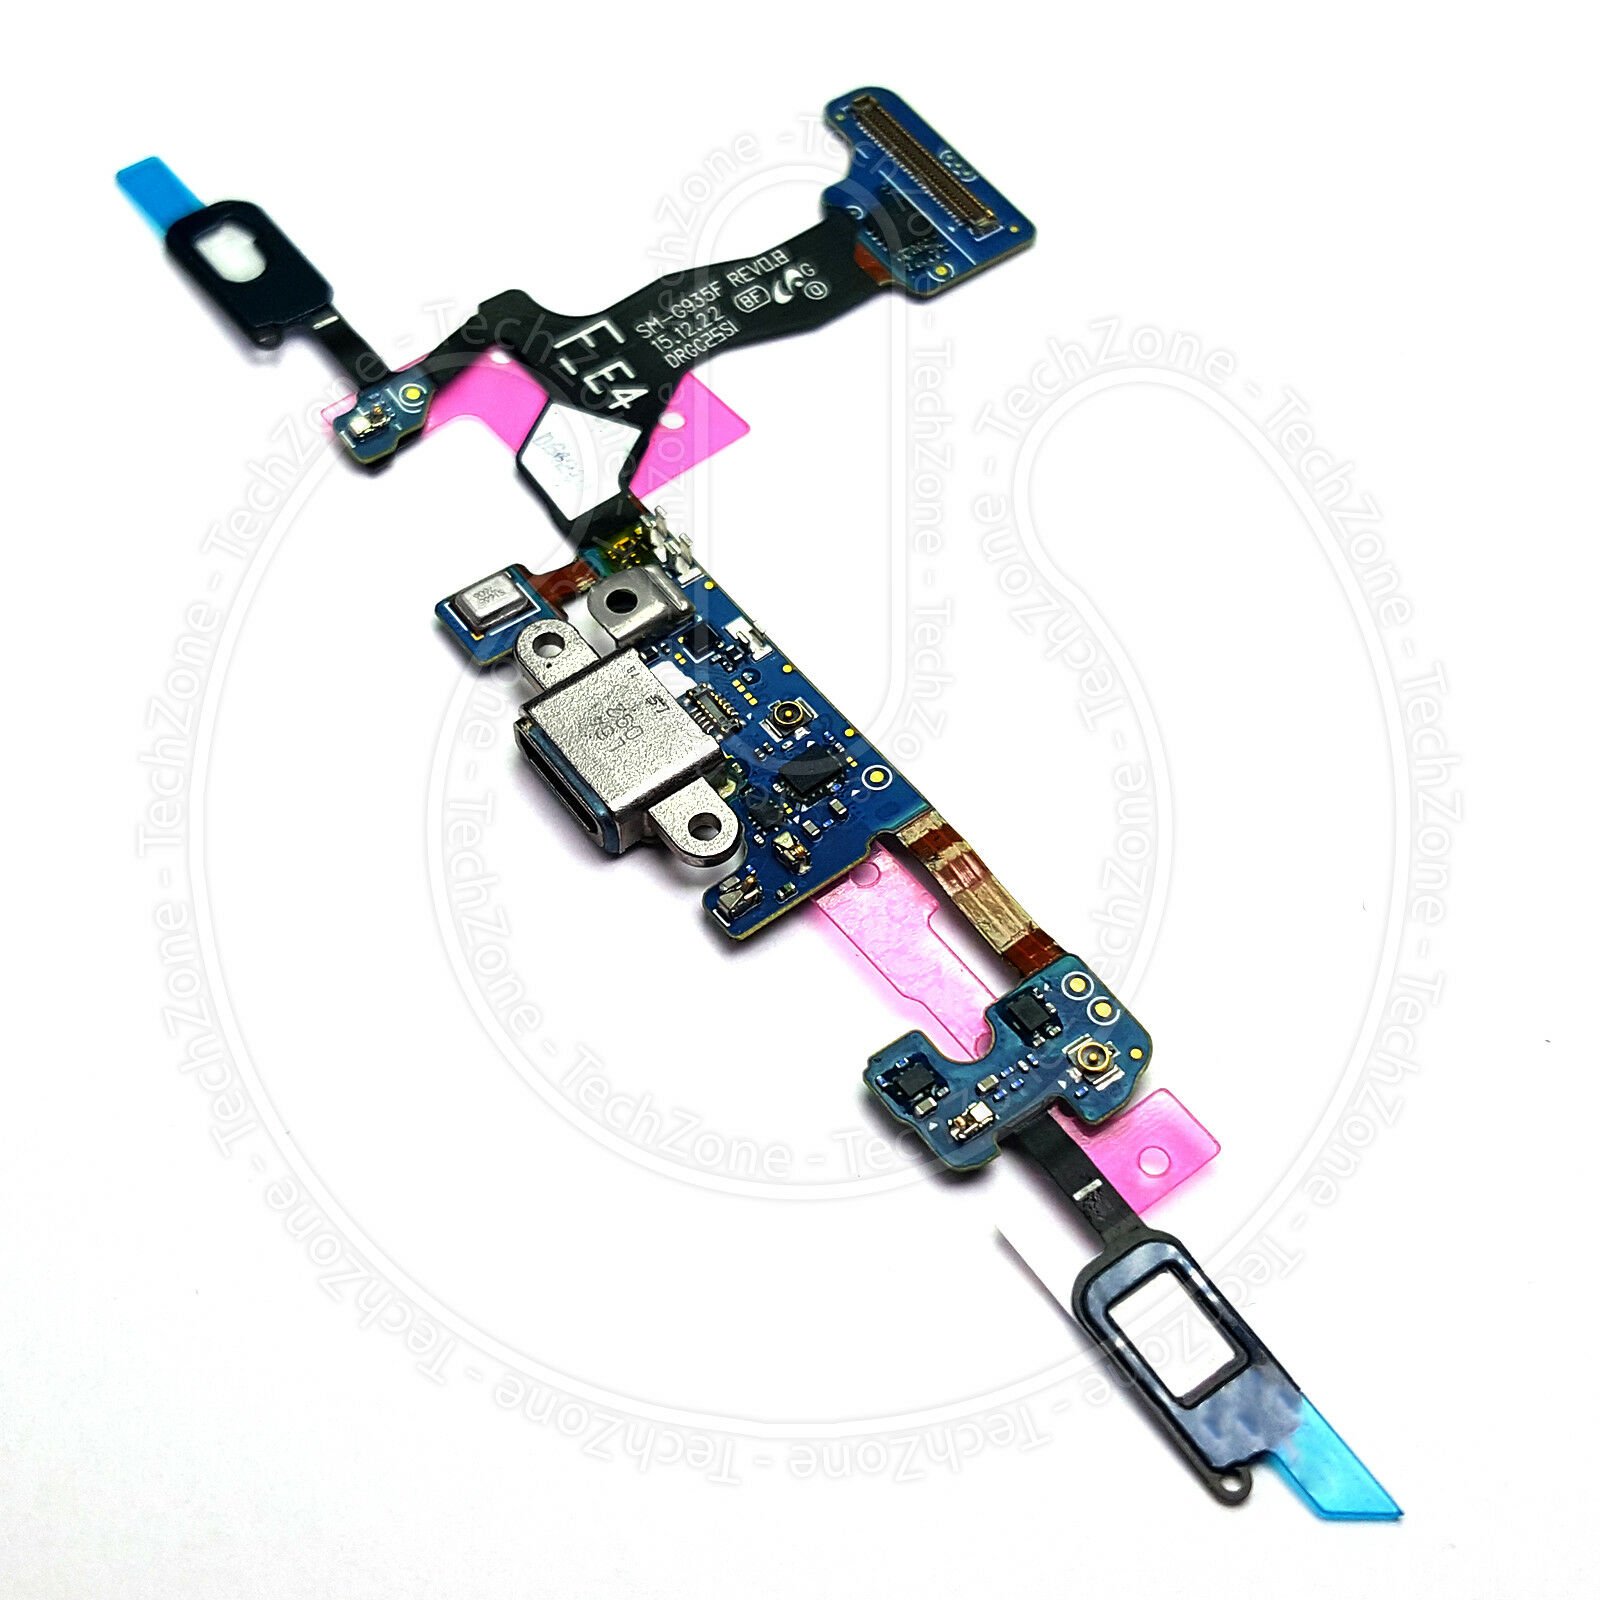 Samsung S7 Micro USB Charging